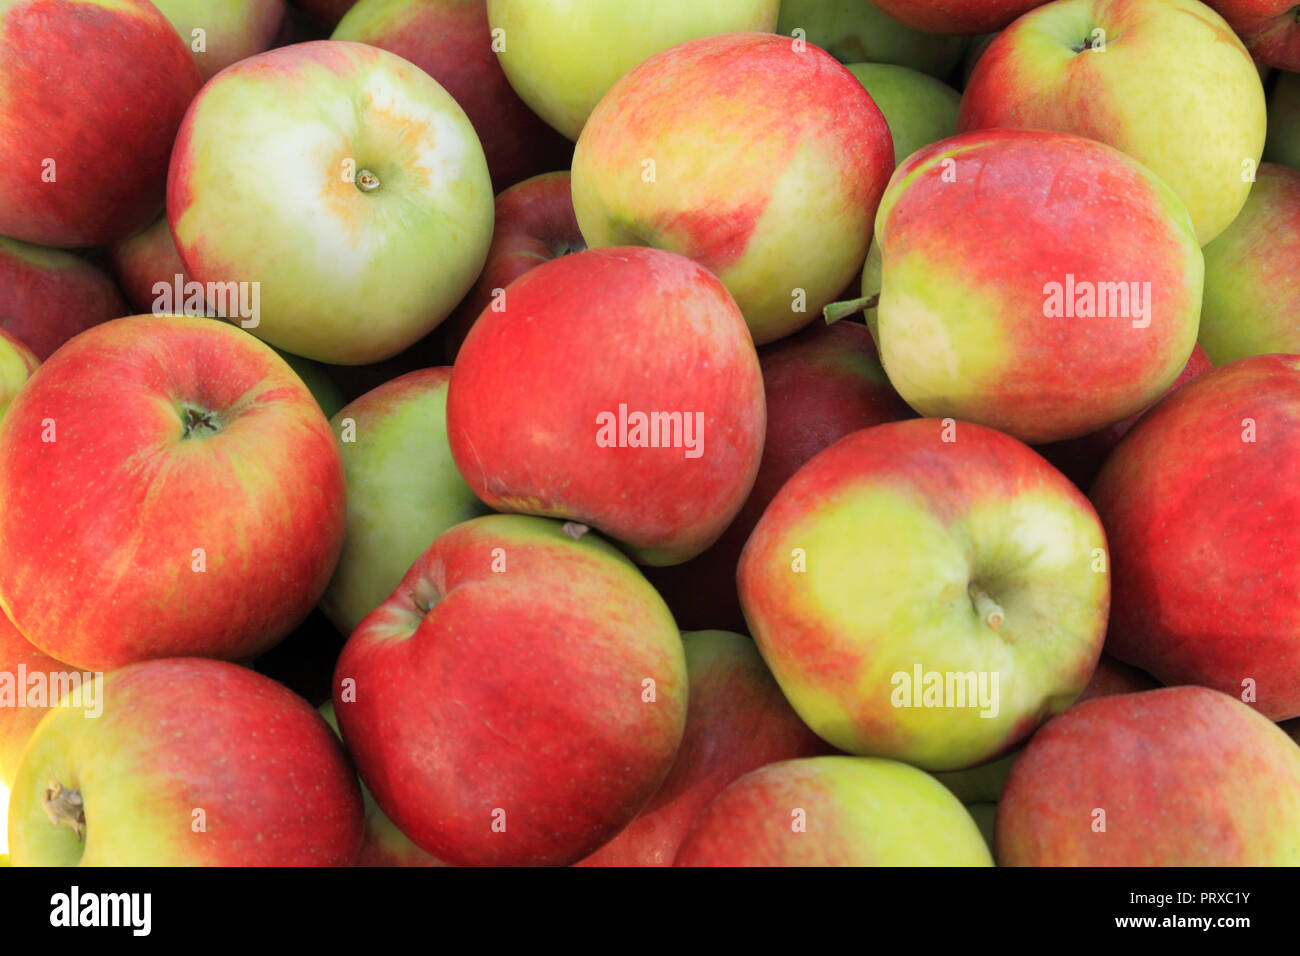 Apple 'Voyager', apples, malus domestica, farm shop, display, fruit, edible Stock Photo